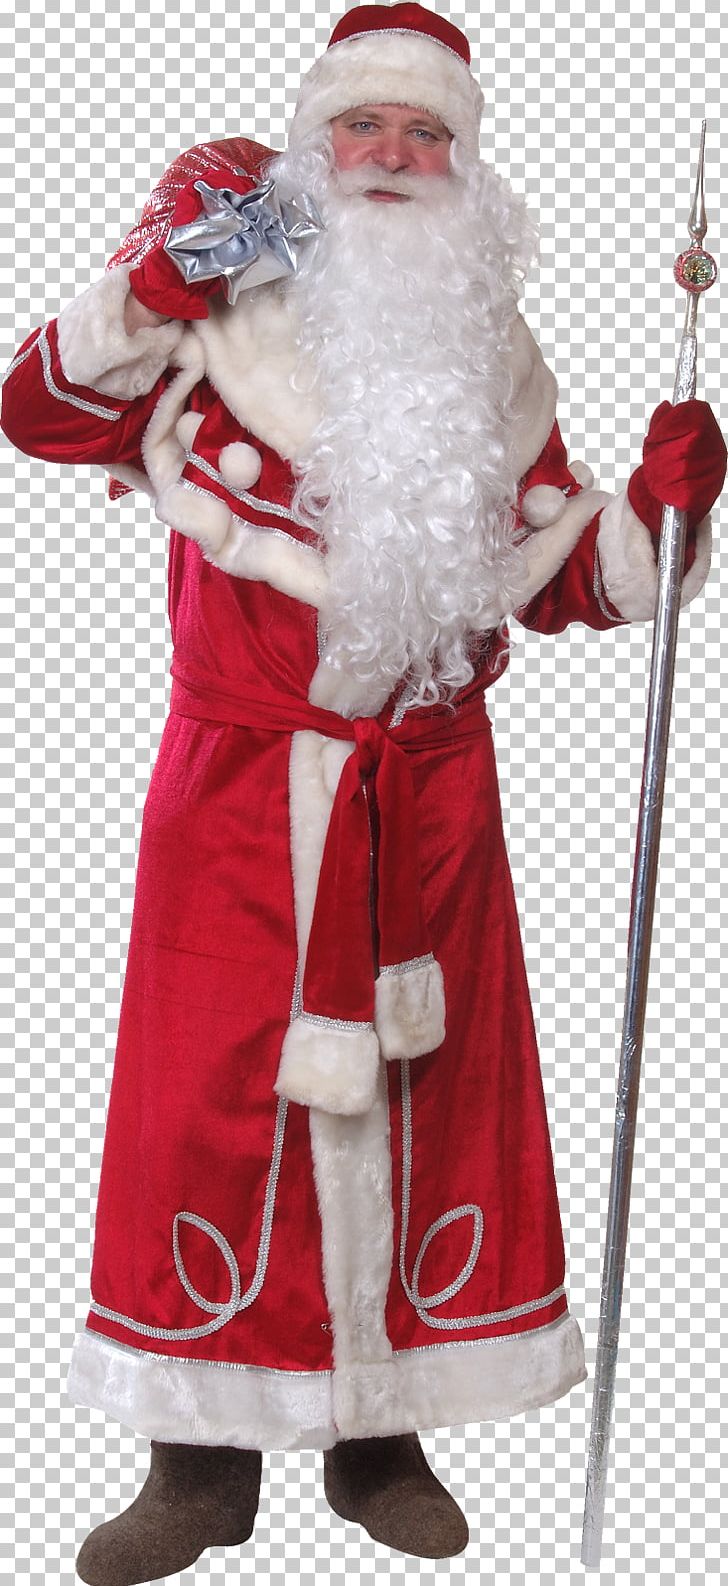 Ded Moroz Santa Claus Snegurochka Grandfather Christmas Ornament PNG, Clipart, Association, Cafe, Christmas, Christmas Ornament, Costume Free PNG Download